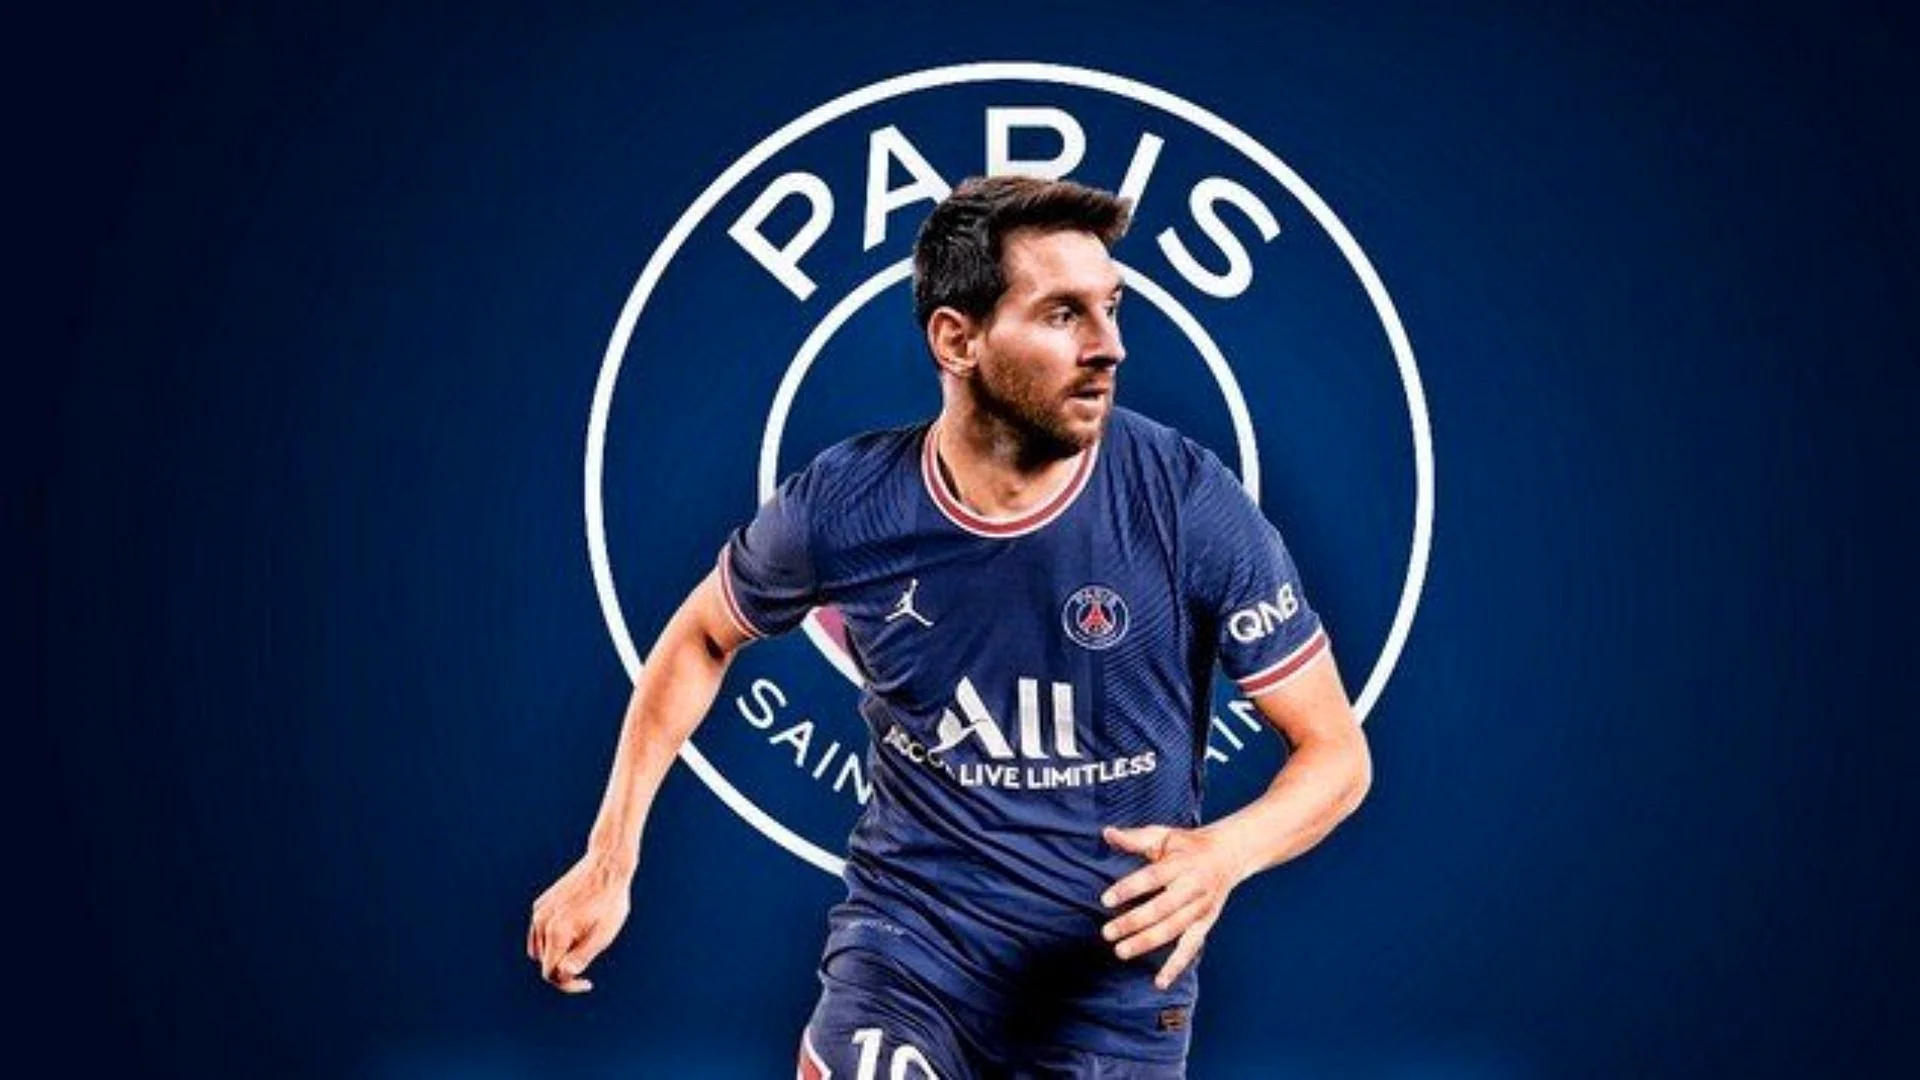 Lionel Messi Psg 2021 Wallpaper